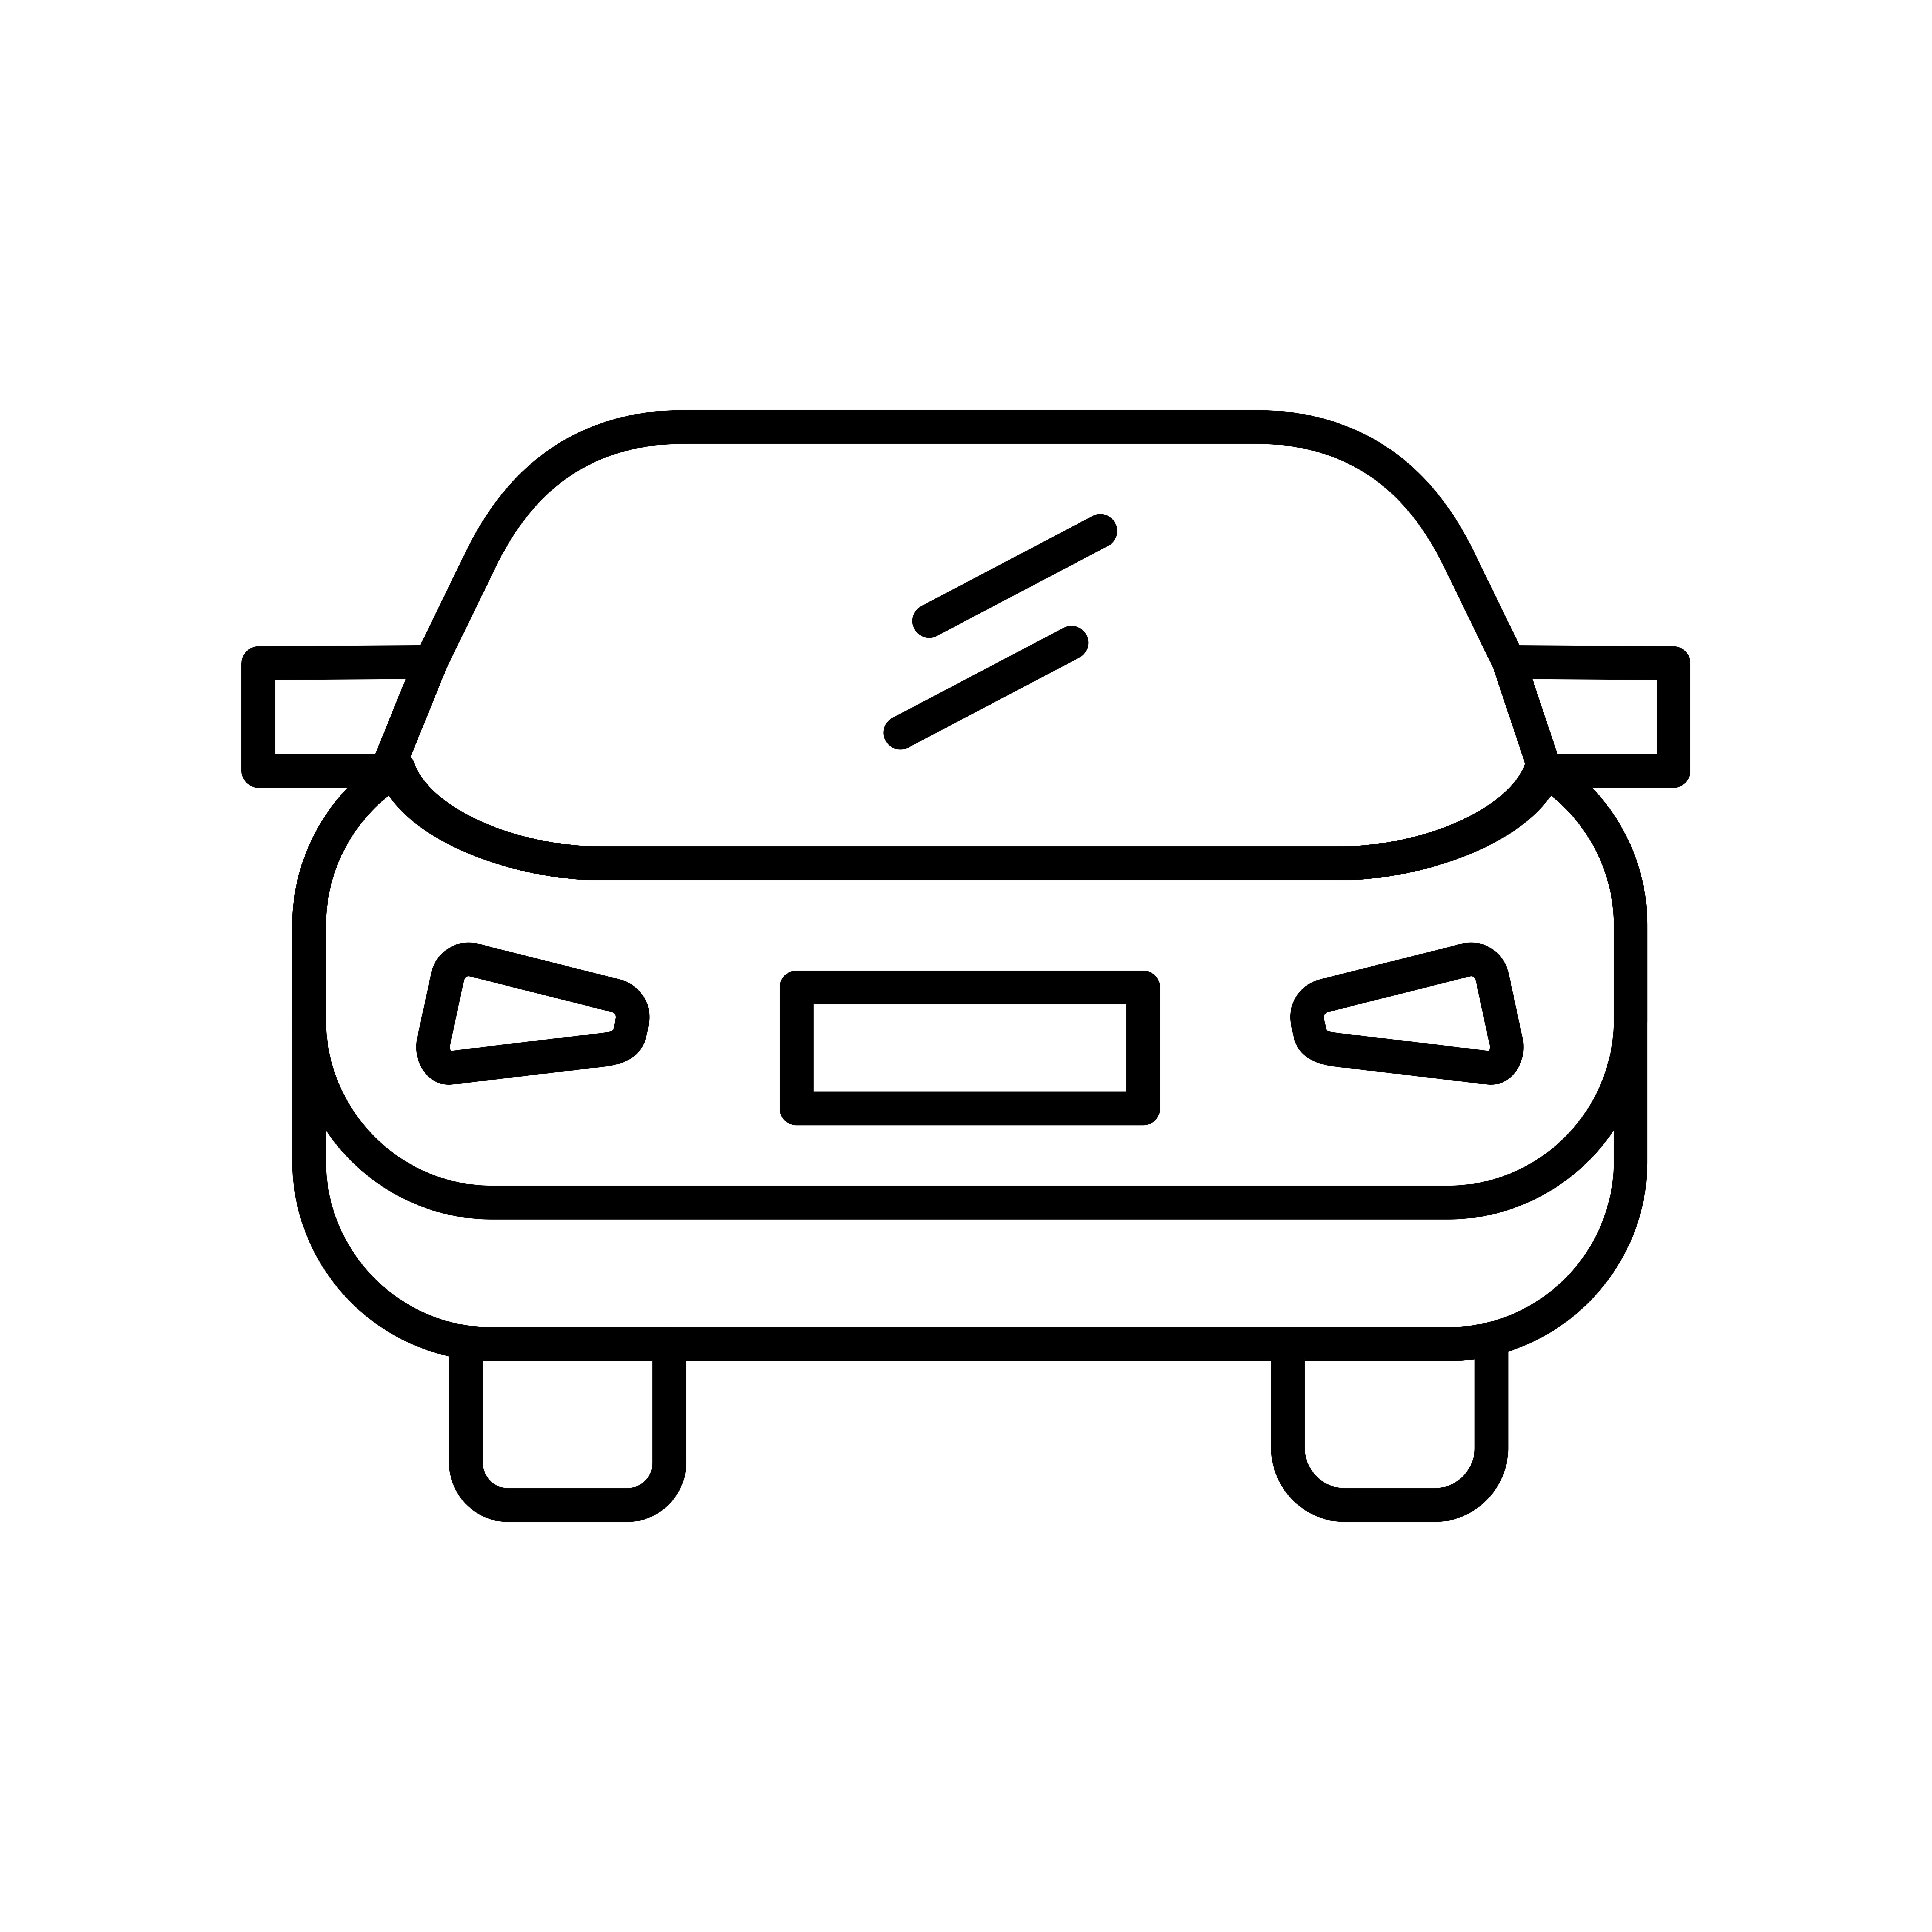 Car line black icon - Download Free Vectors, Clipart ...